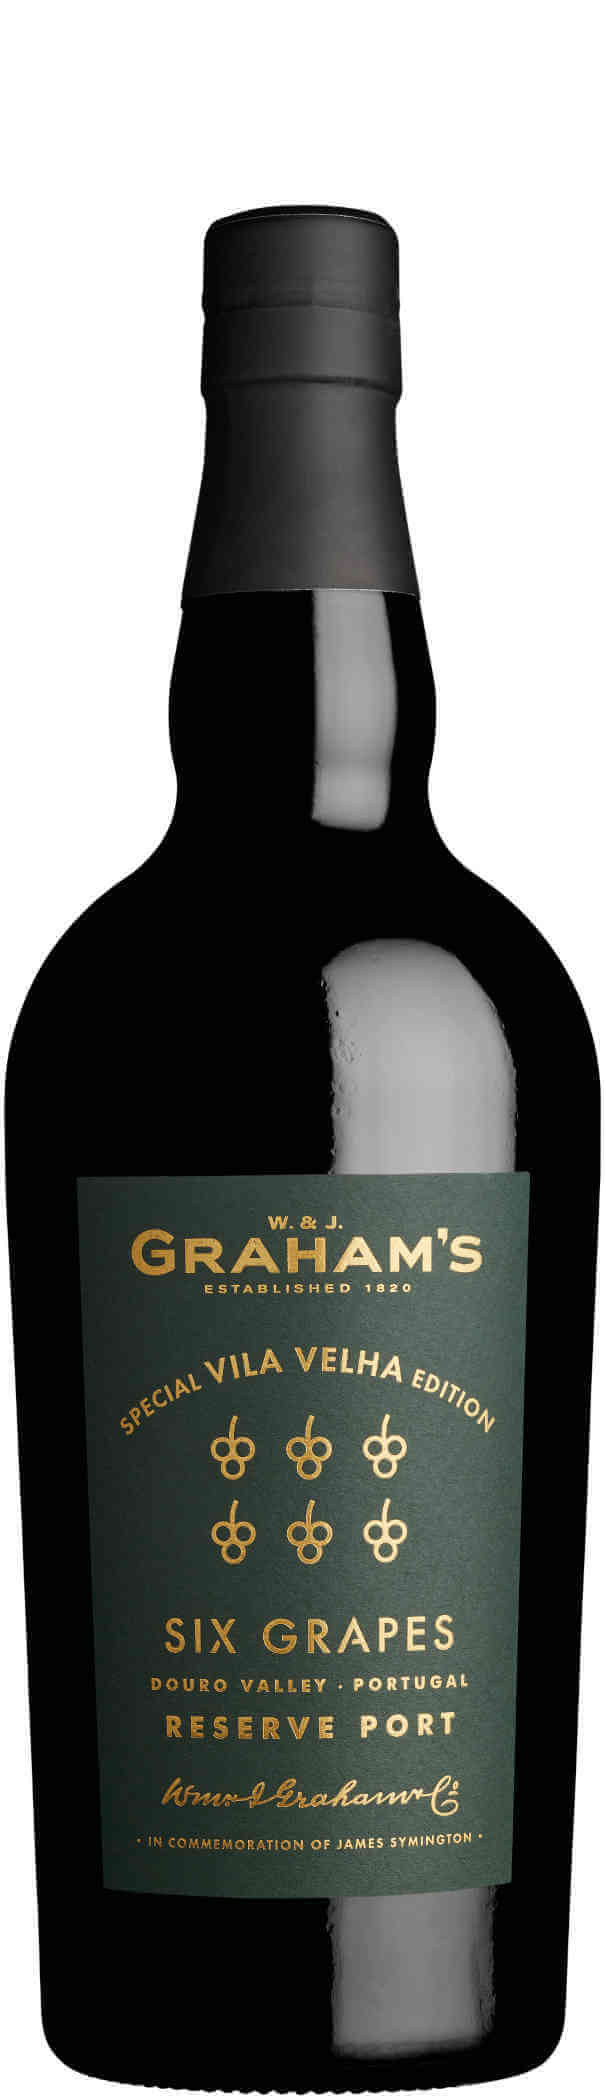 Grahams-Six-Grapes-Vila-Velha-Edition